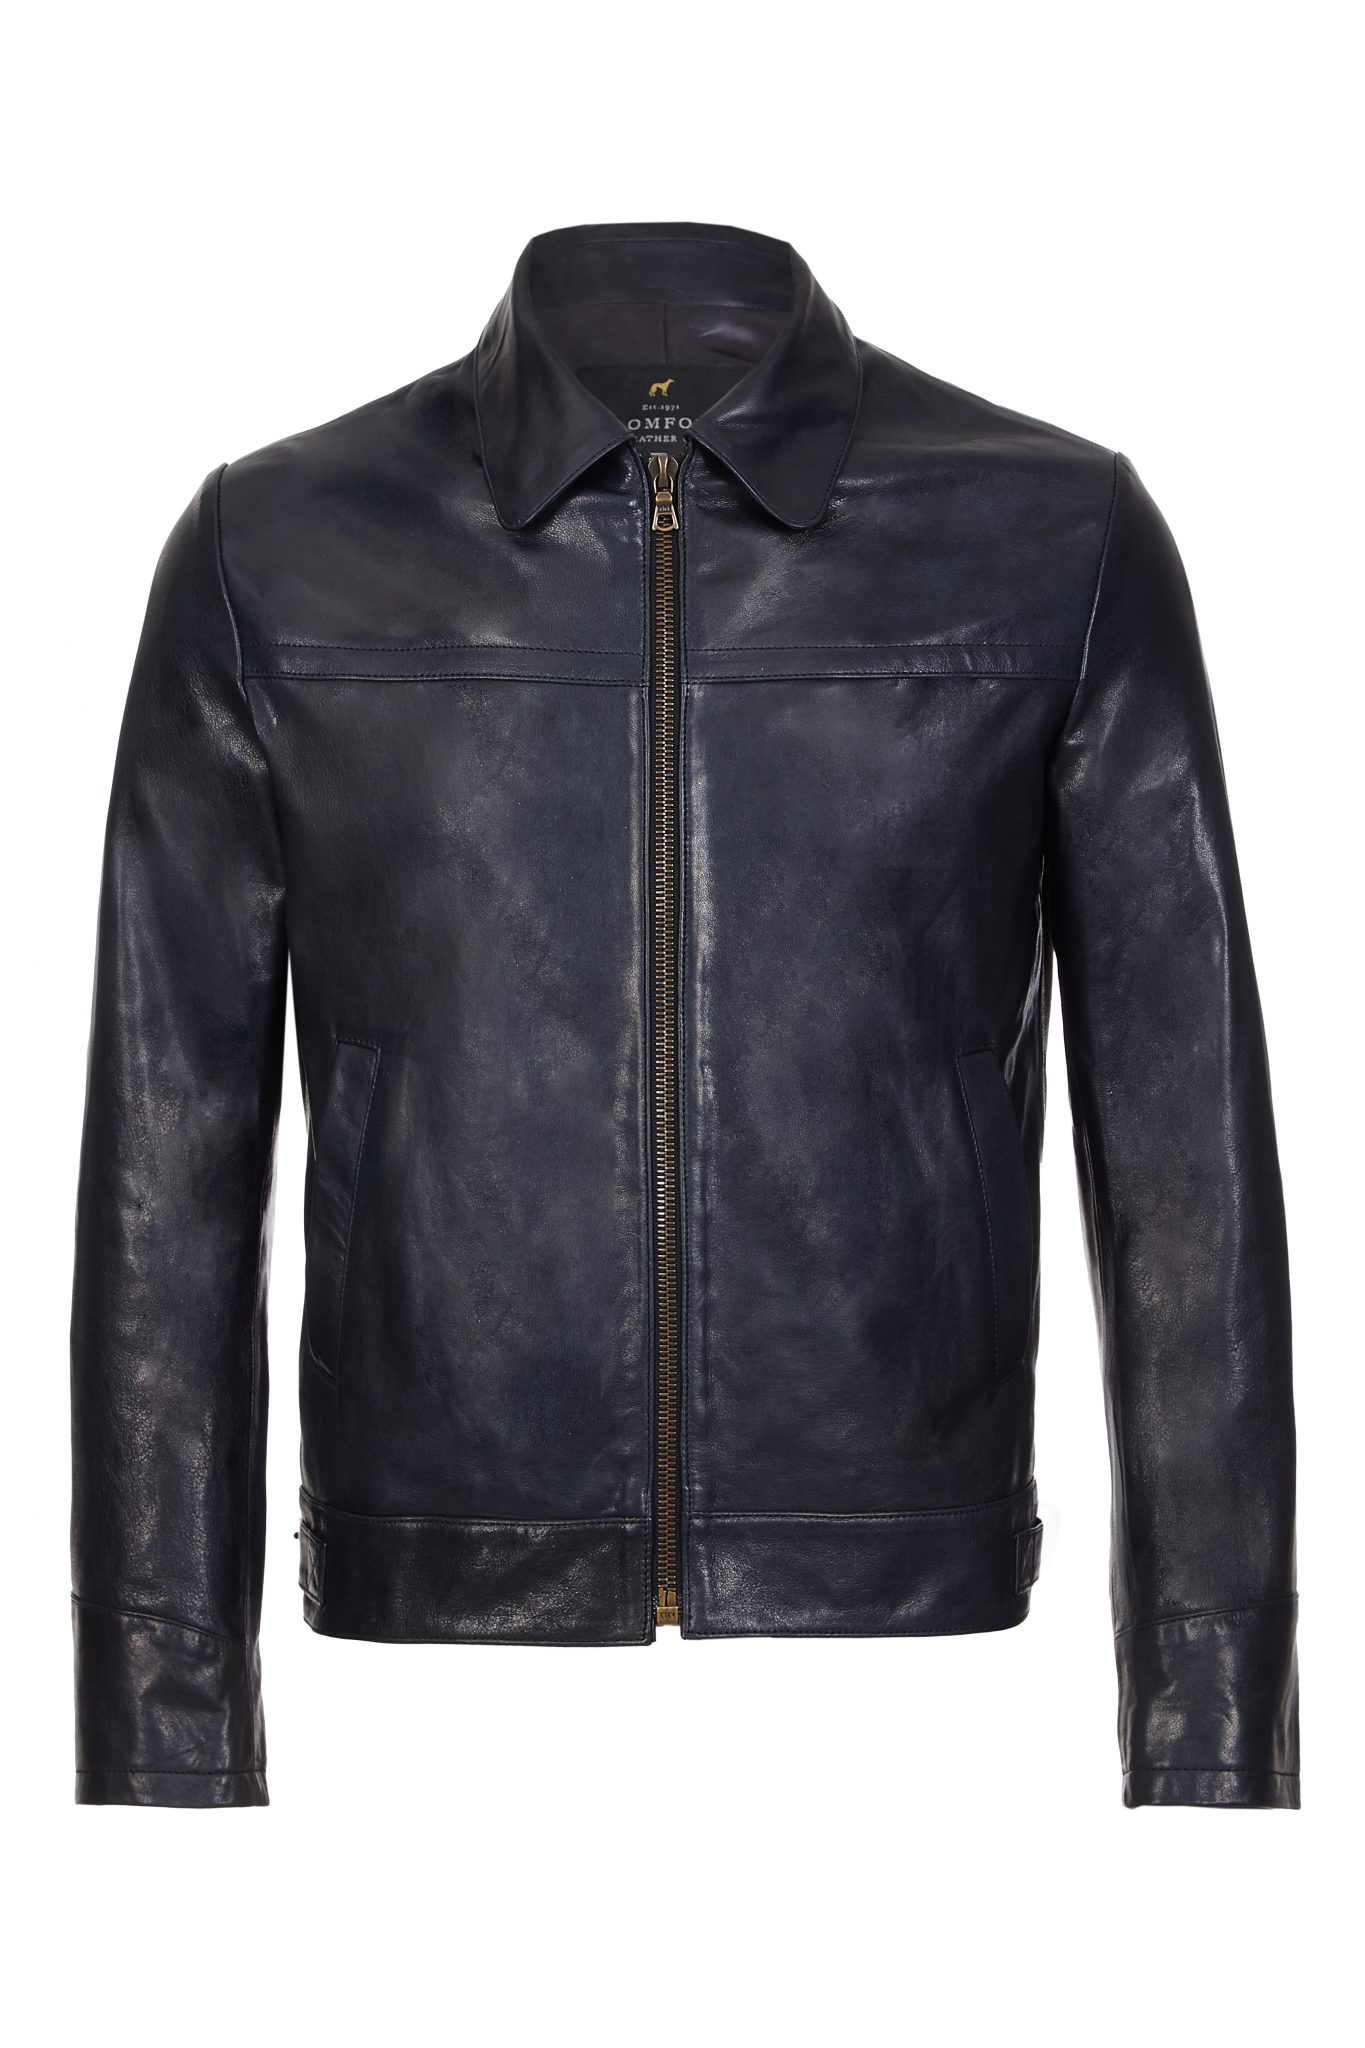 Oldman - Cromford Leather Co. London